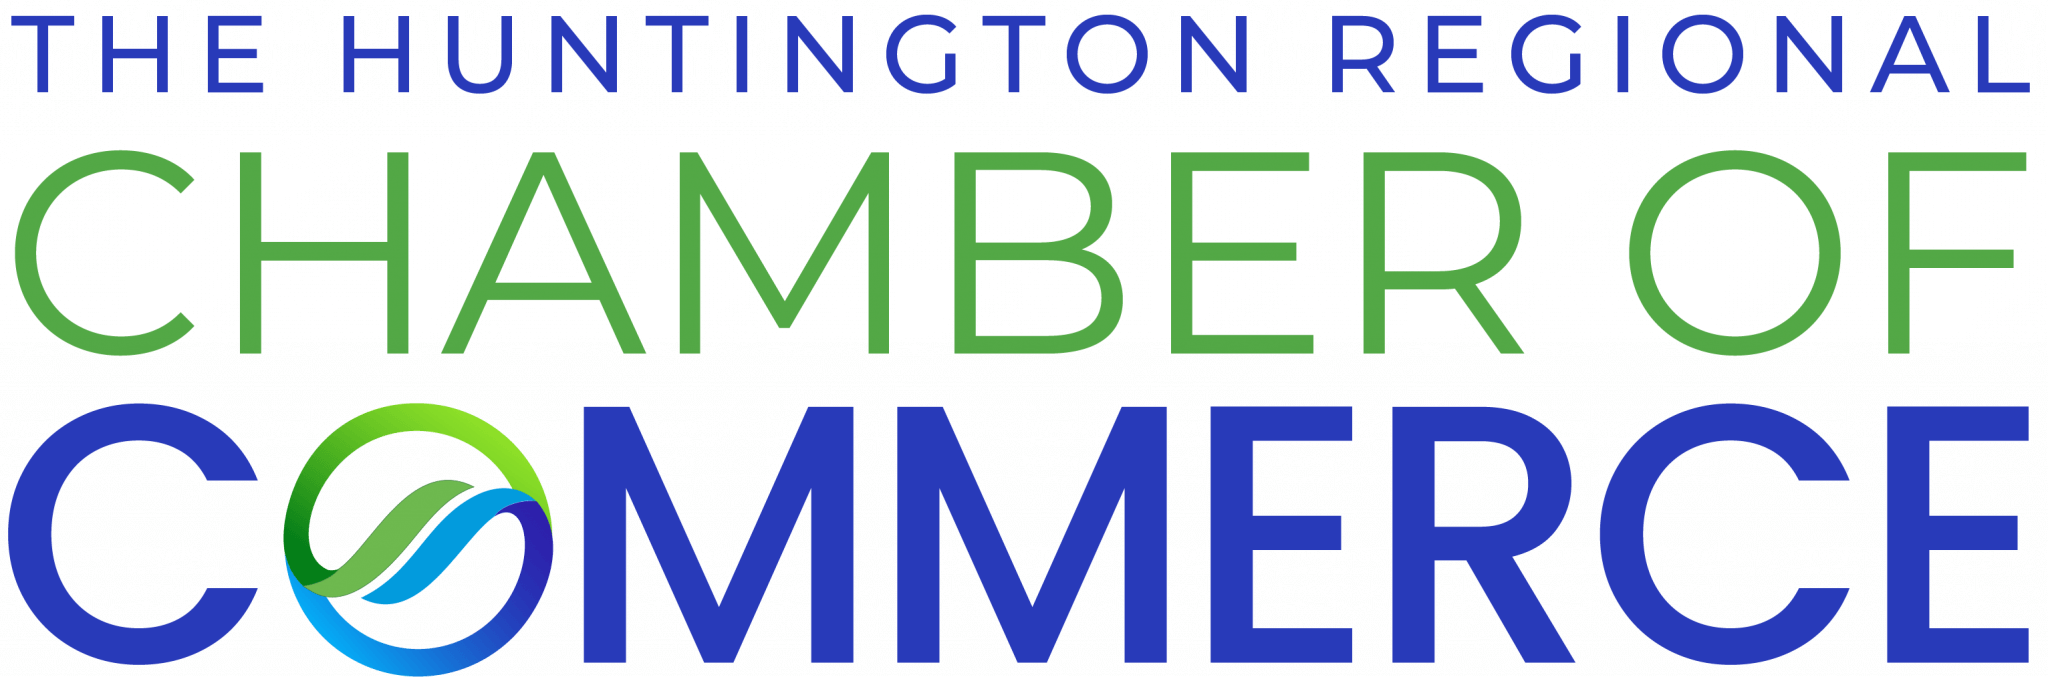 Huntington Regional Chamber of Commerce logo